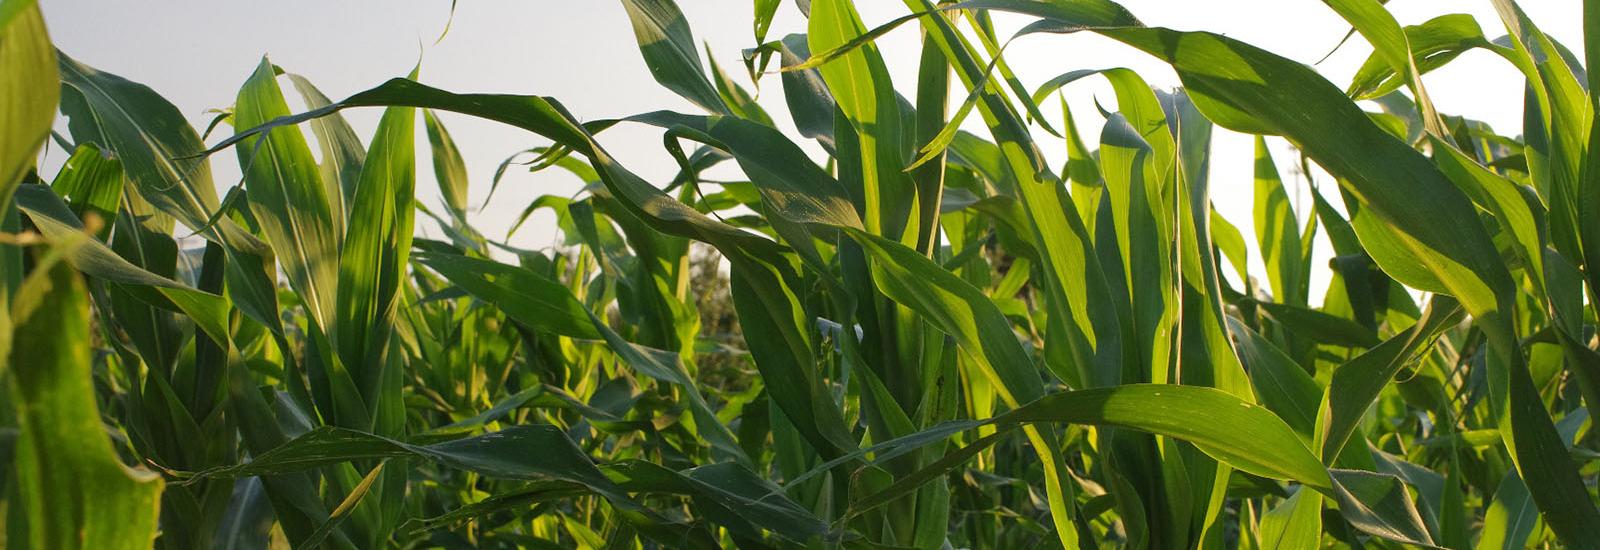 Corn field up close